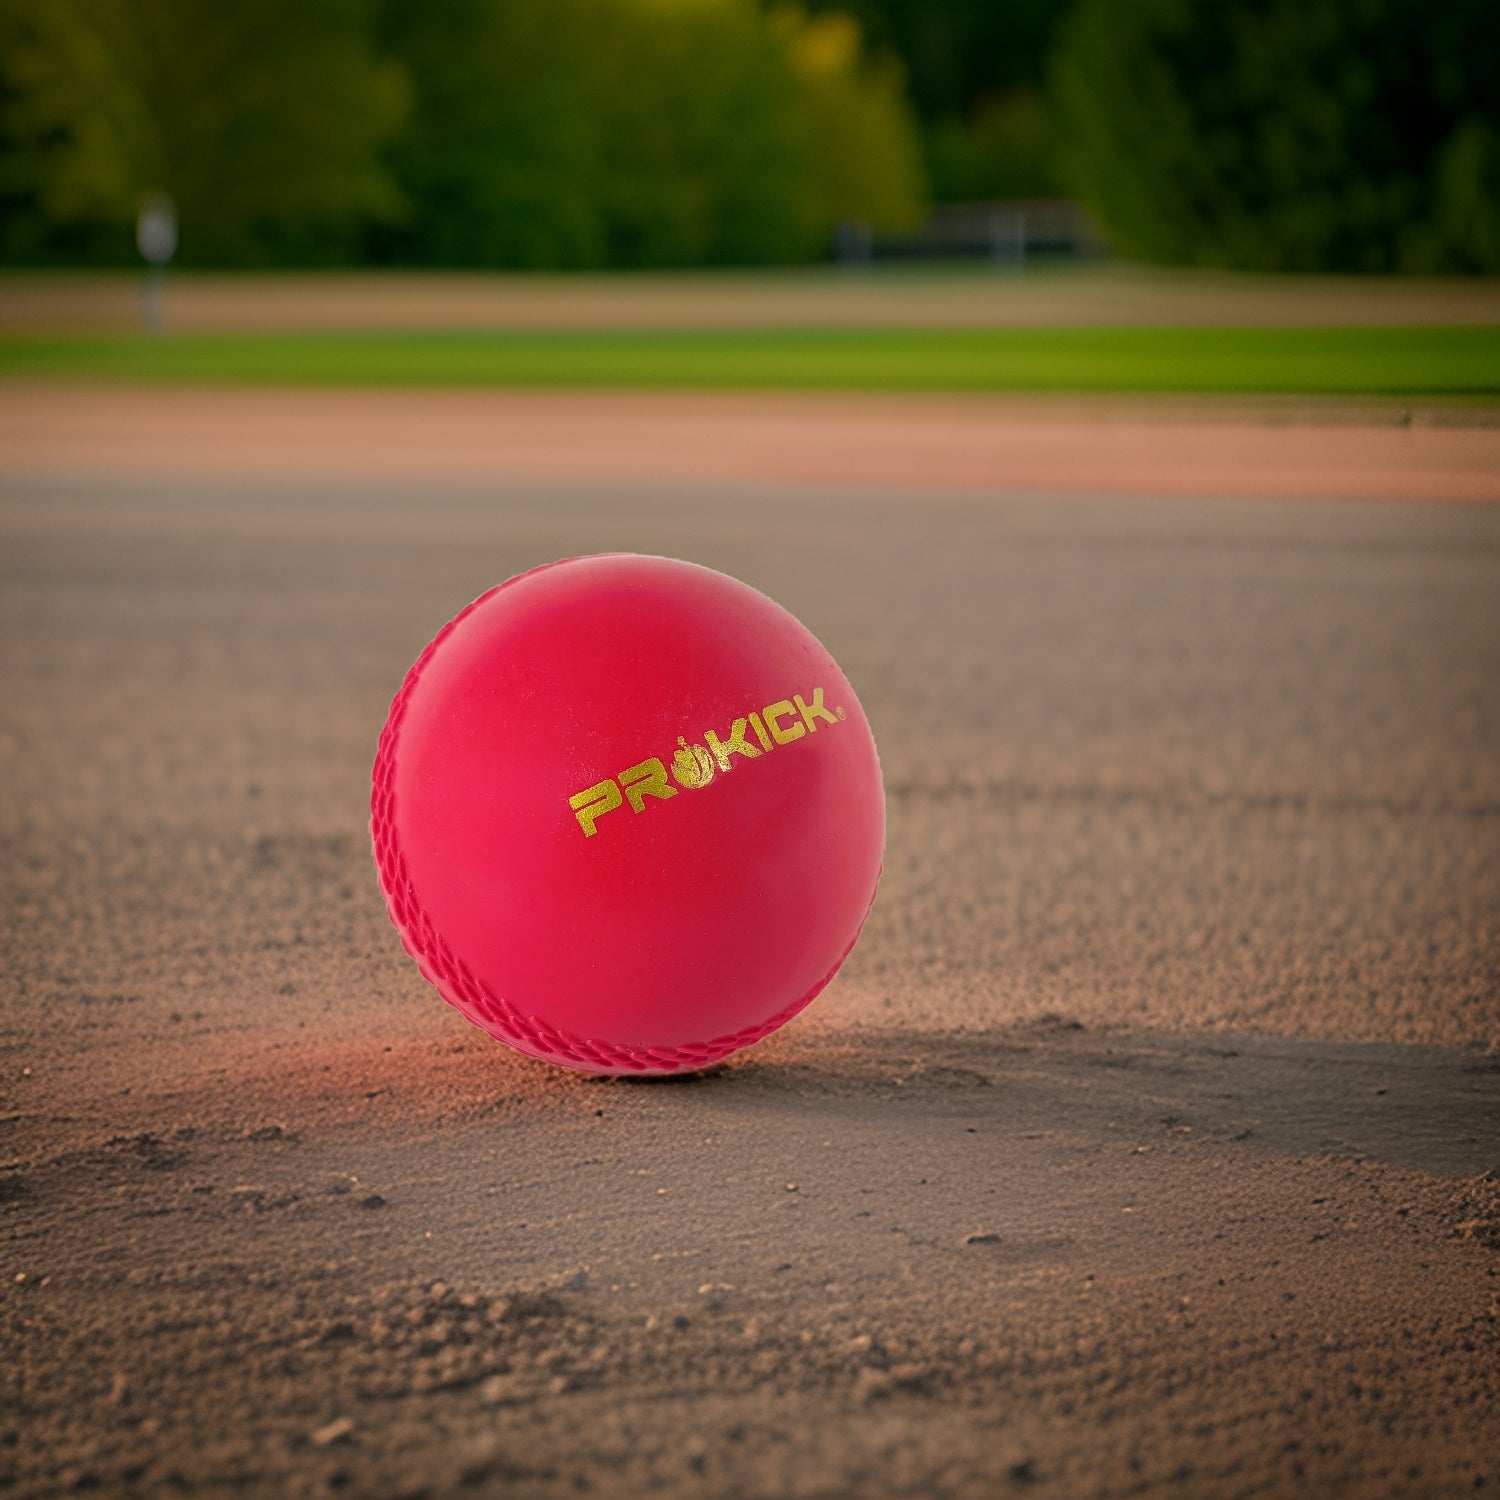 Prokick Synthetic Cricket Ball, Red - 1pc - Best Price online Prokicksports.com